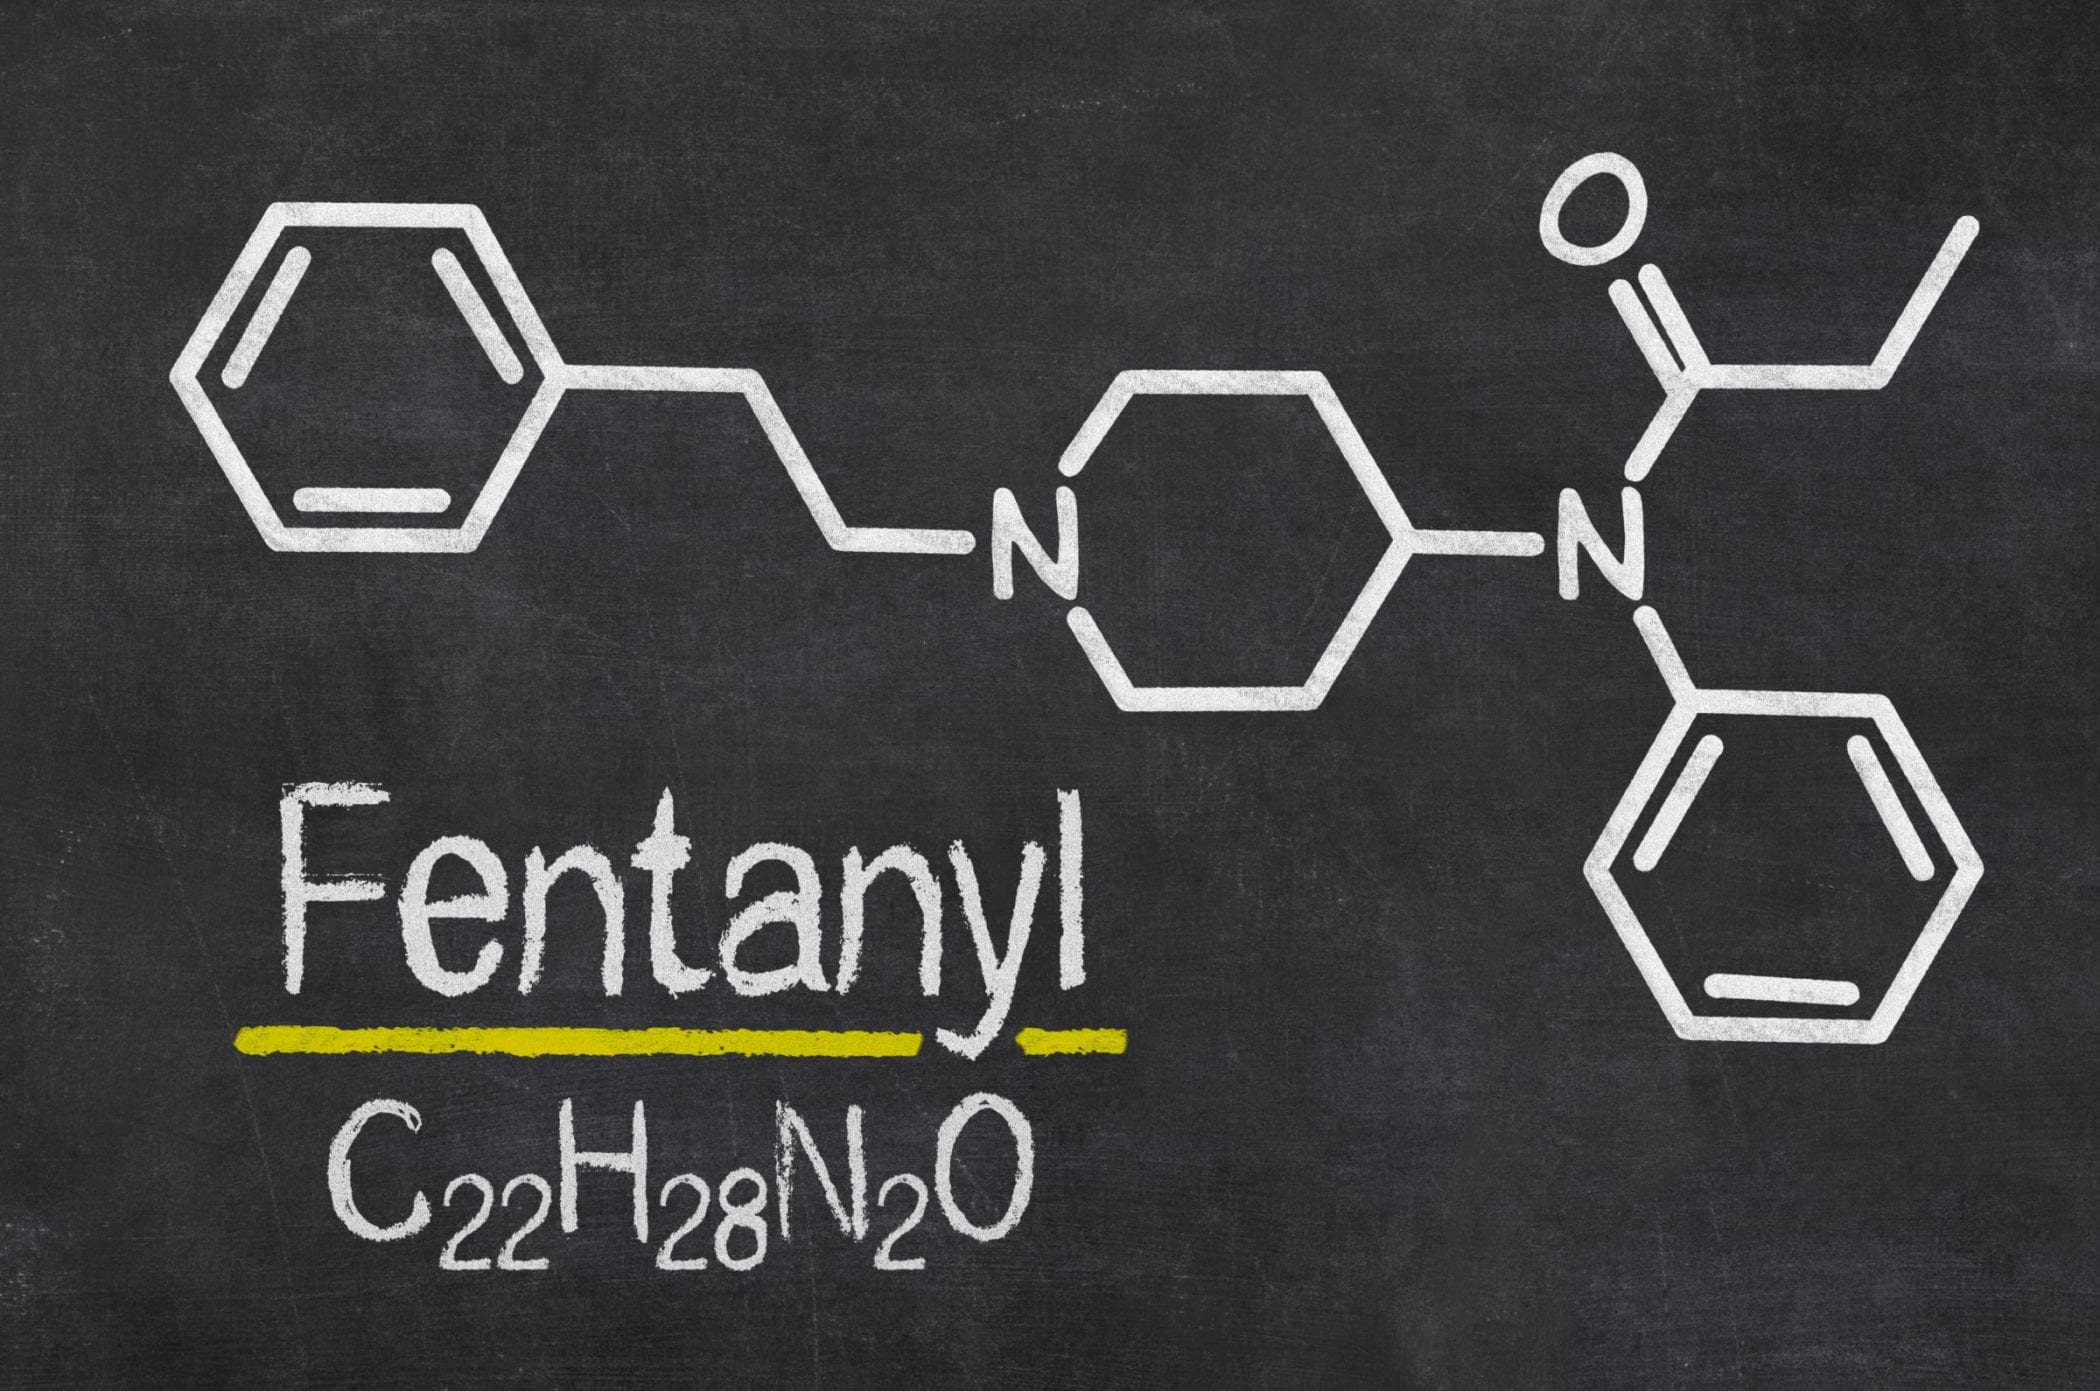 Fentanyl Drug Rehab